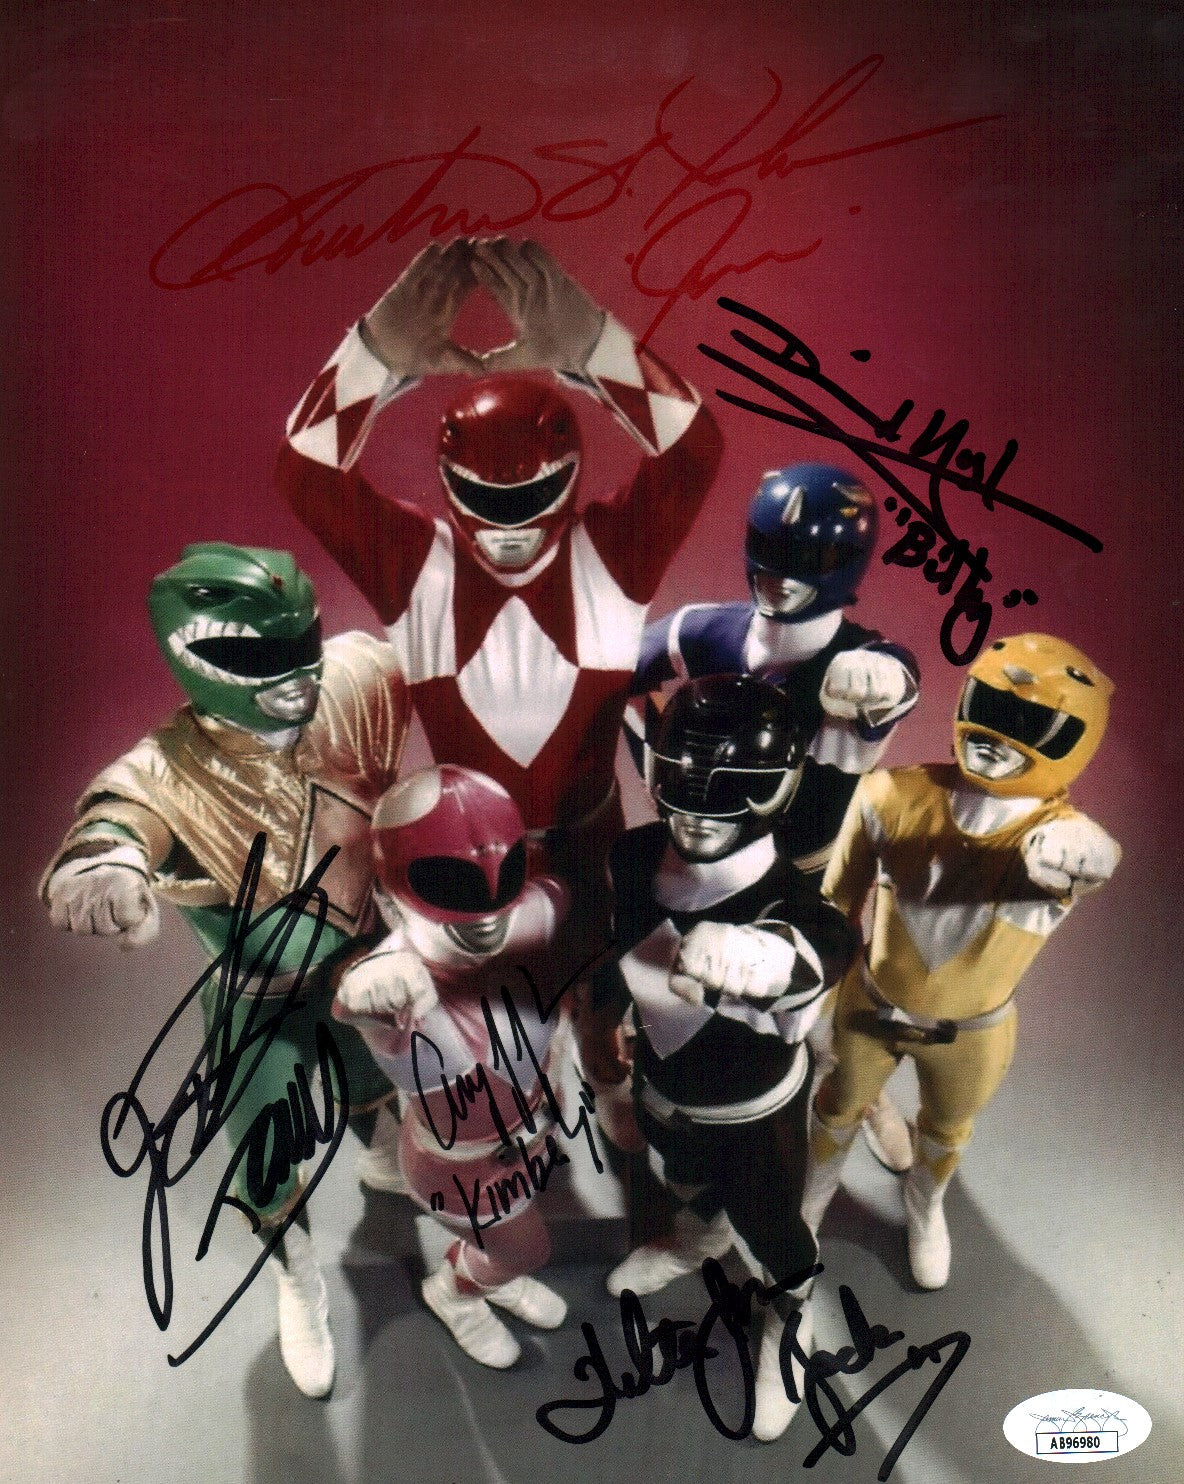 Mighty Morphin Power Rangers 8x10 Signed Photo  Cast 5x Frank, Johnson, Yost, Jones, St. John JSA Certified Autograph